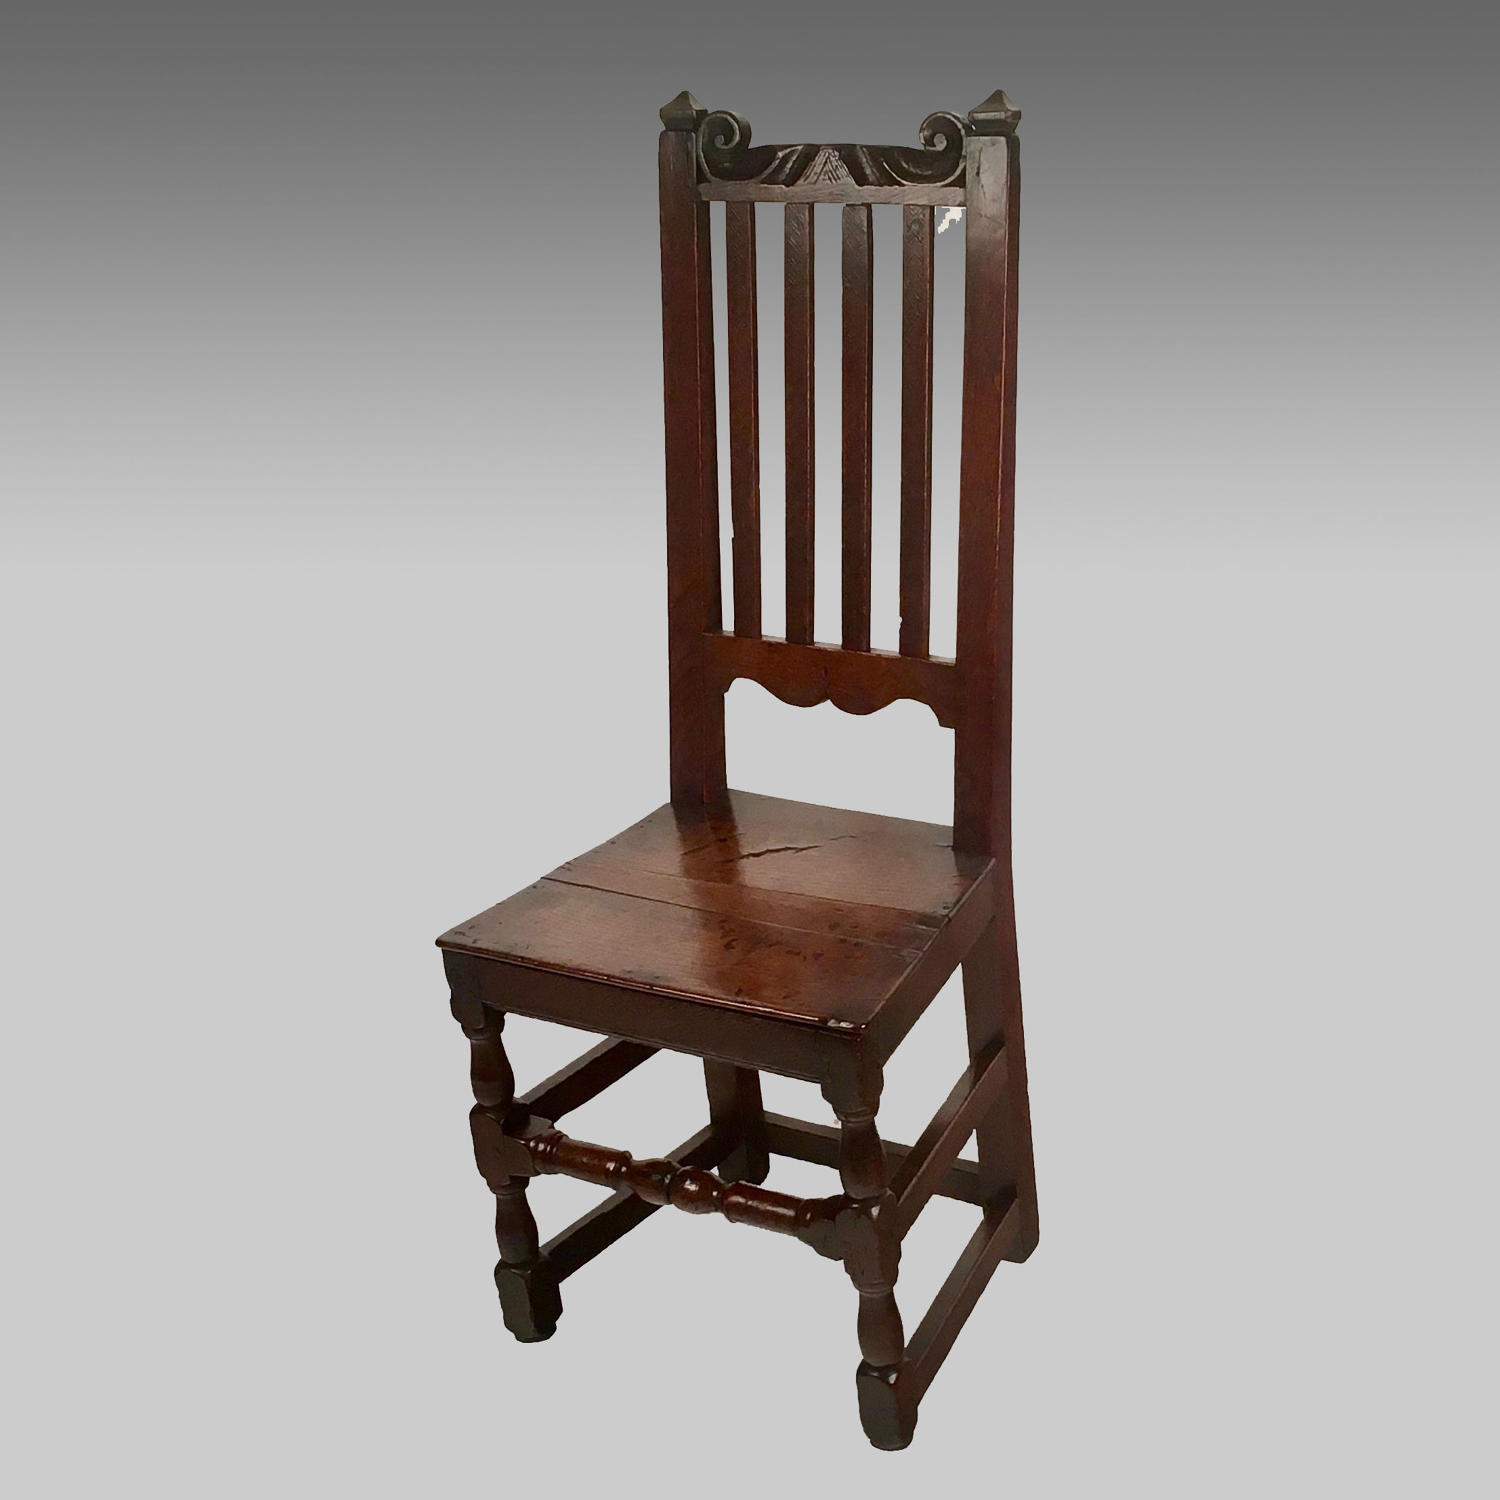 17th century, Charles 11 oak single chair